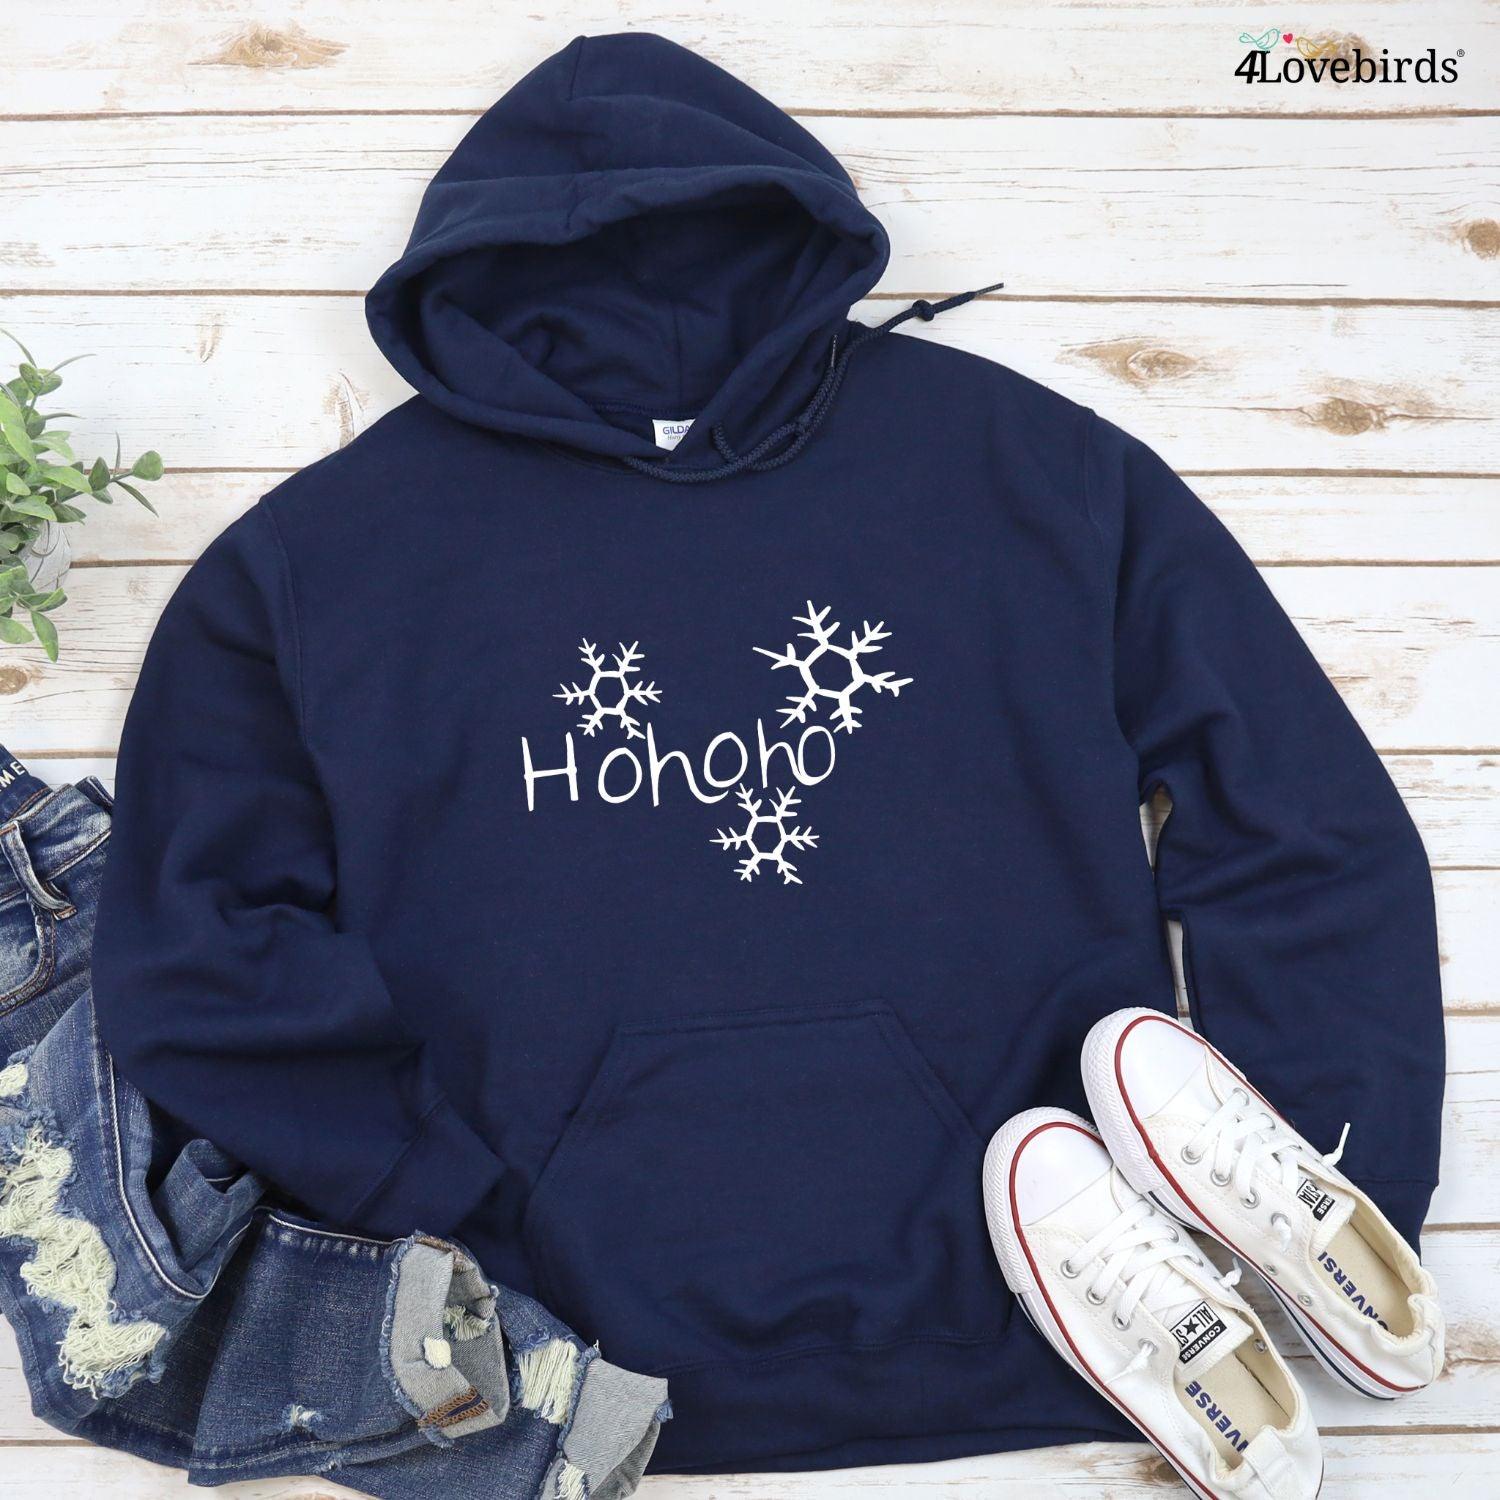 Hohoho & Where My Ho's At? Holiday-Inspired Christmas Matching Set - 4Lovebirds